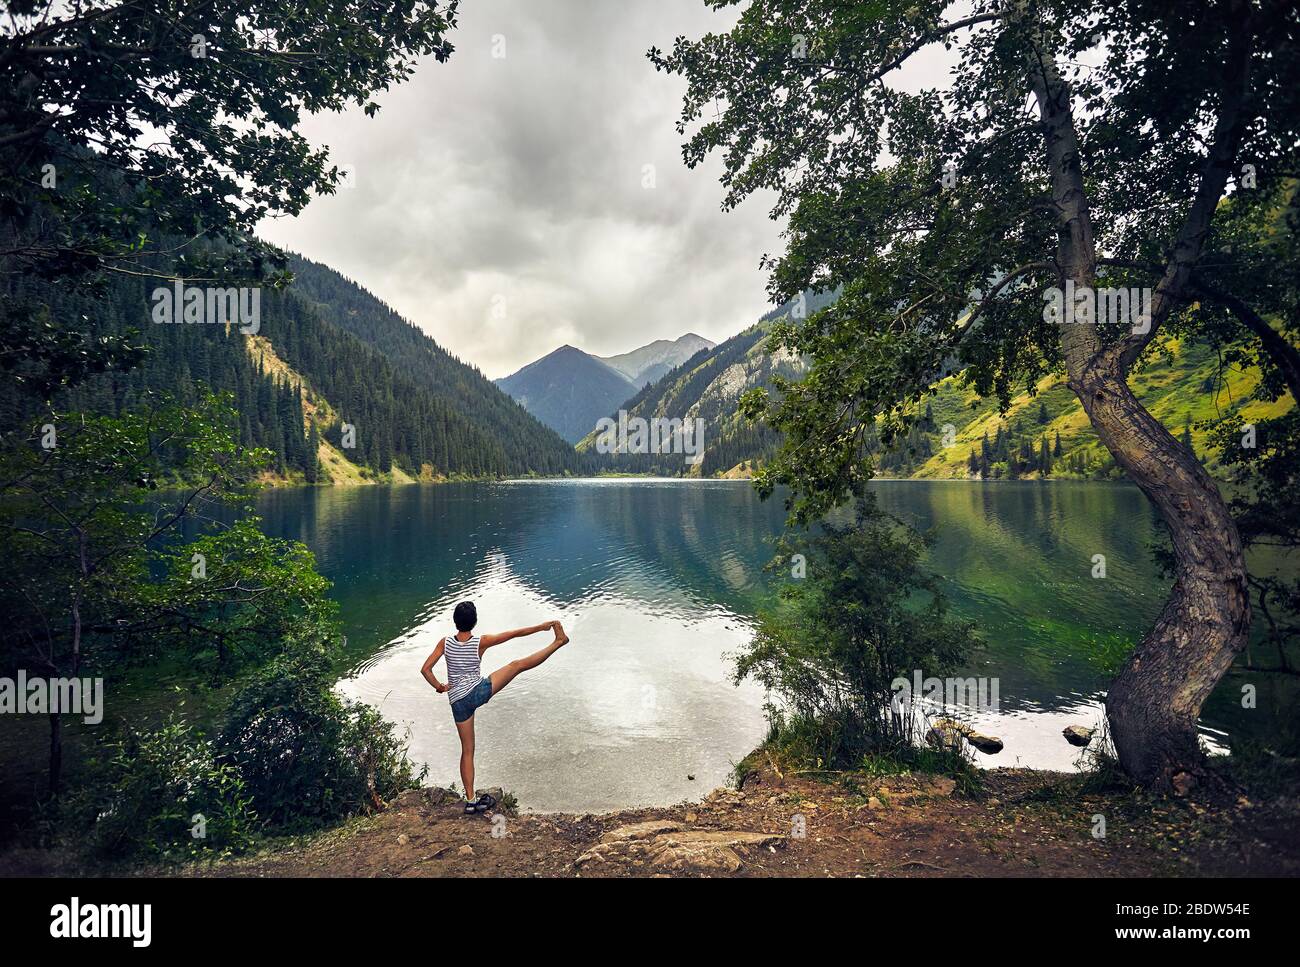 Junge Frau ist Yoga balance Pose am Bergsee mit bedecktem Himmel Hintergrund Stockfoto